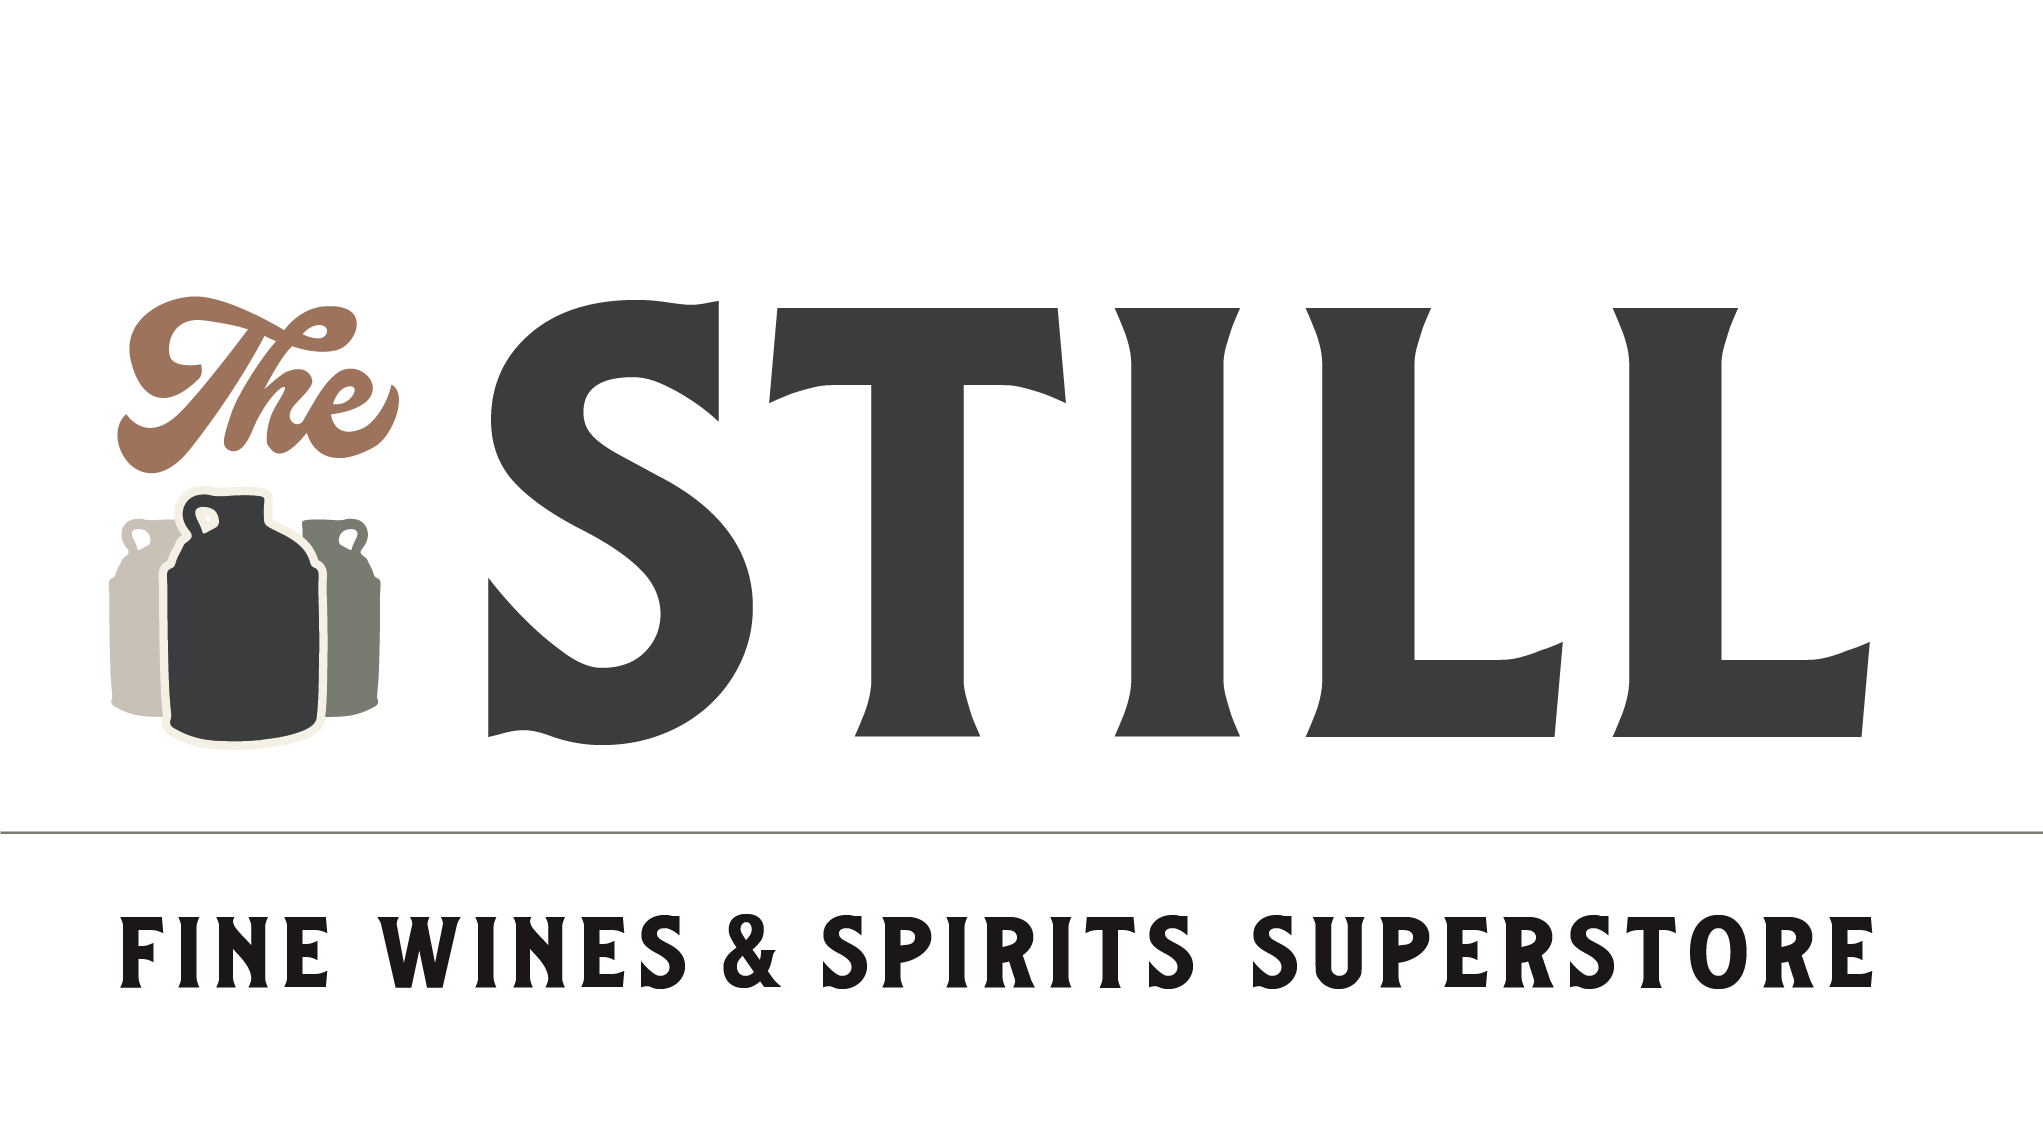 A theme logo of The Still